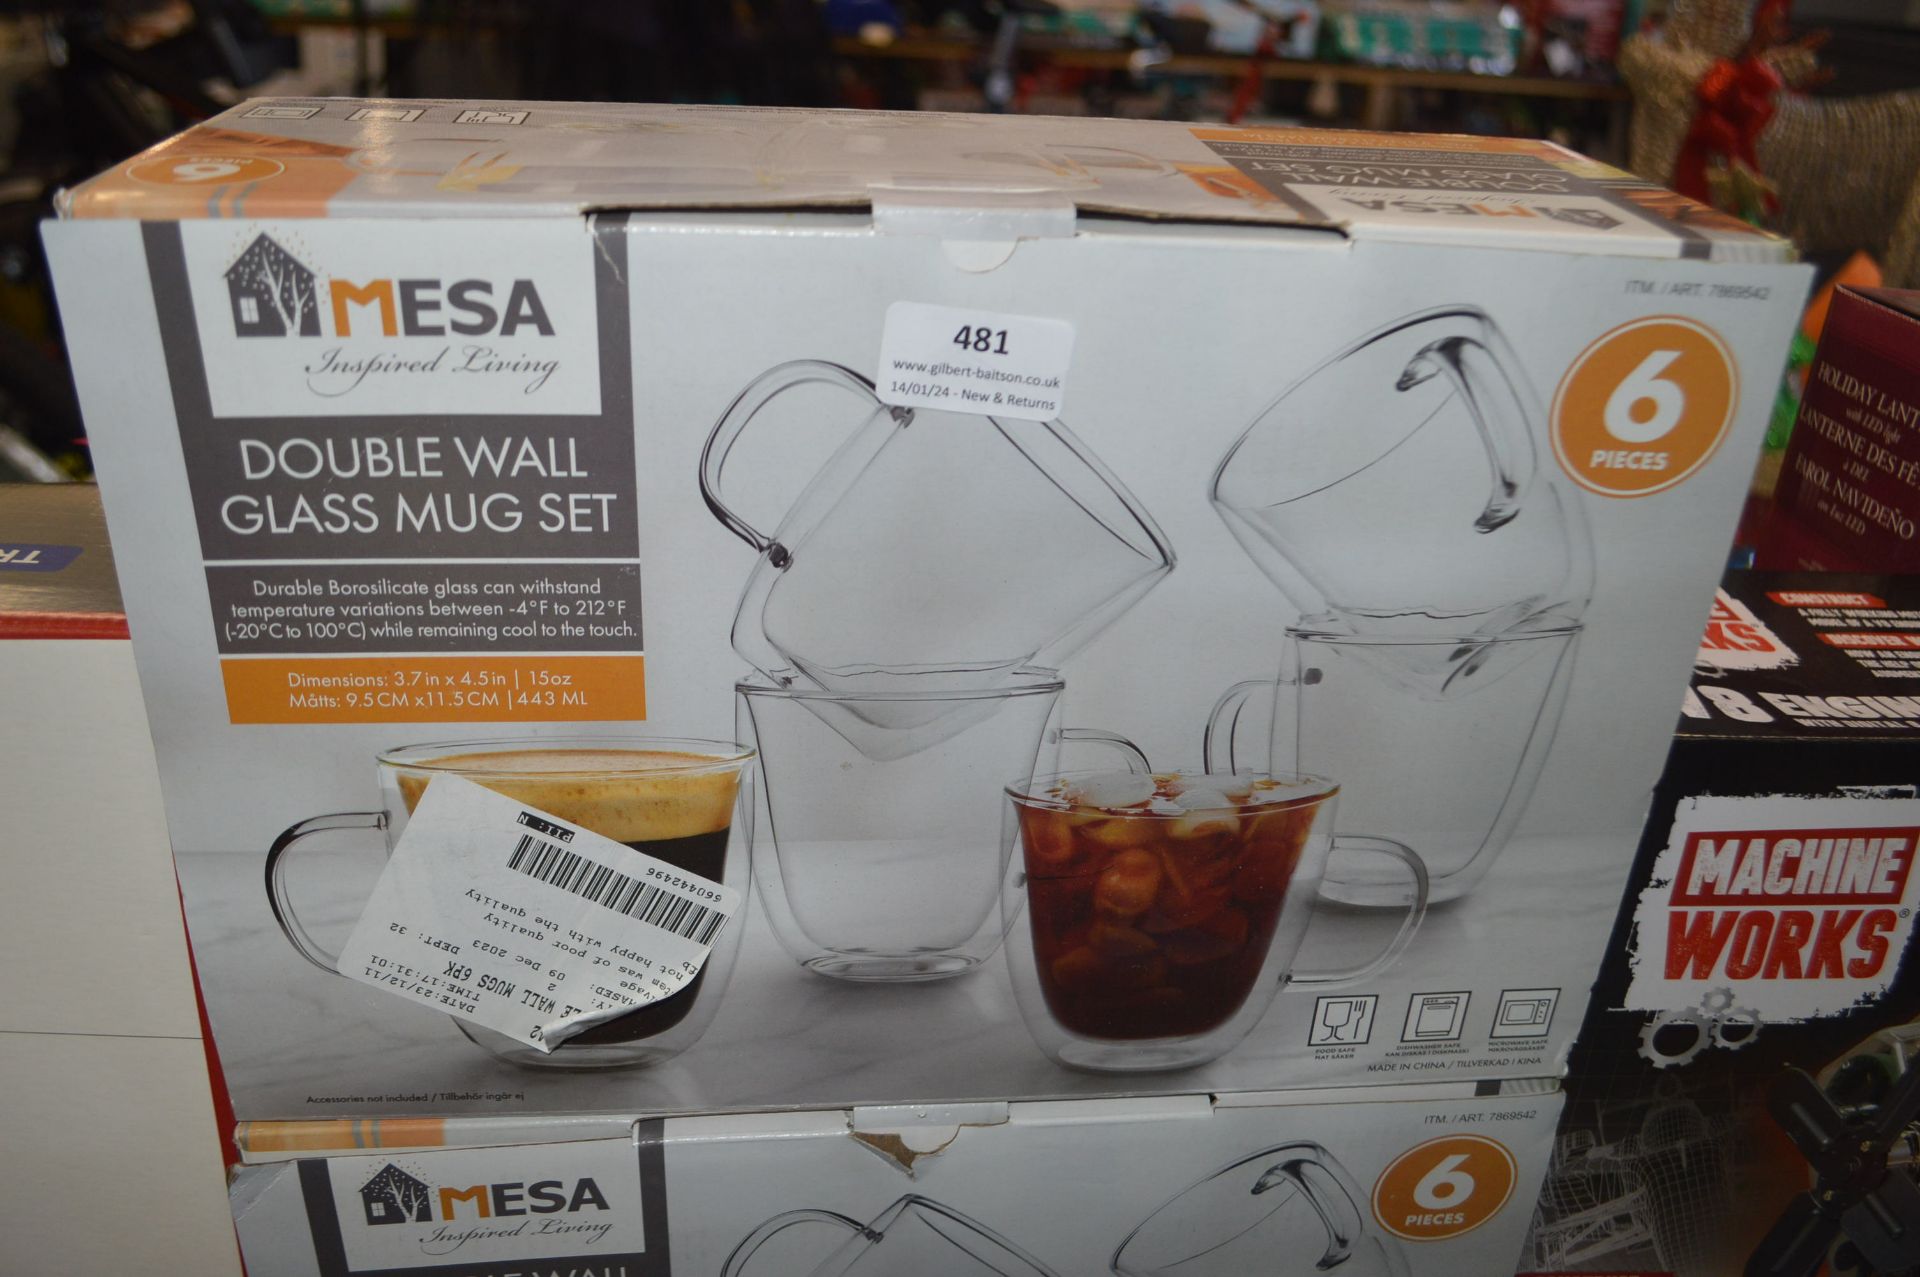 *Mesa Double Wall Glass Mugs